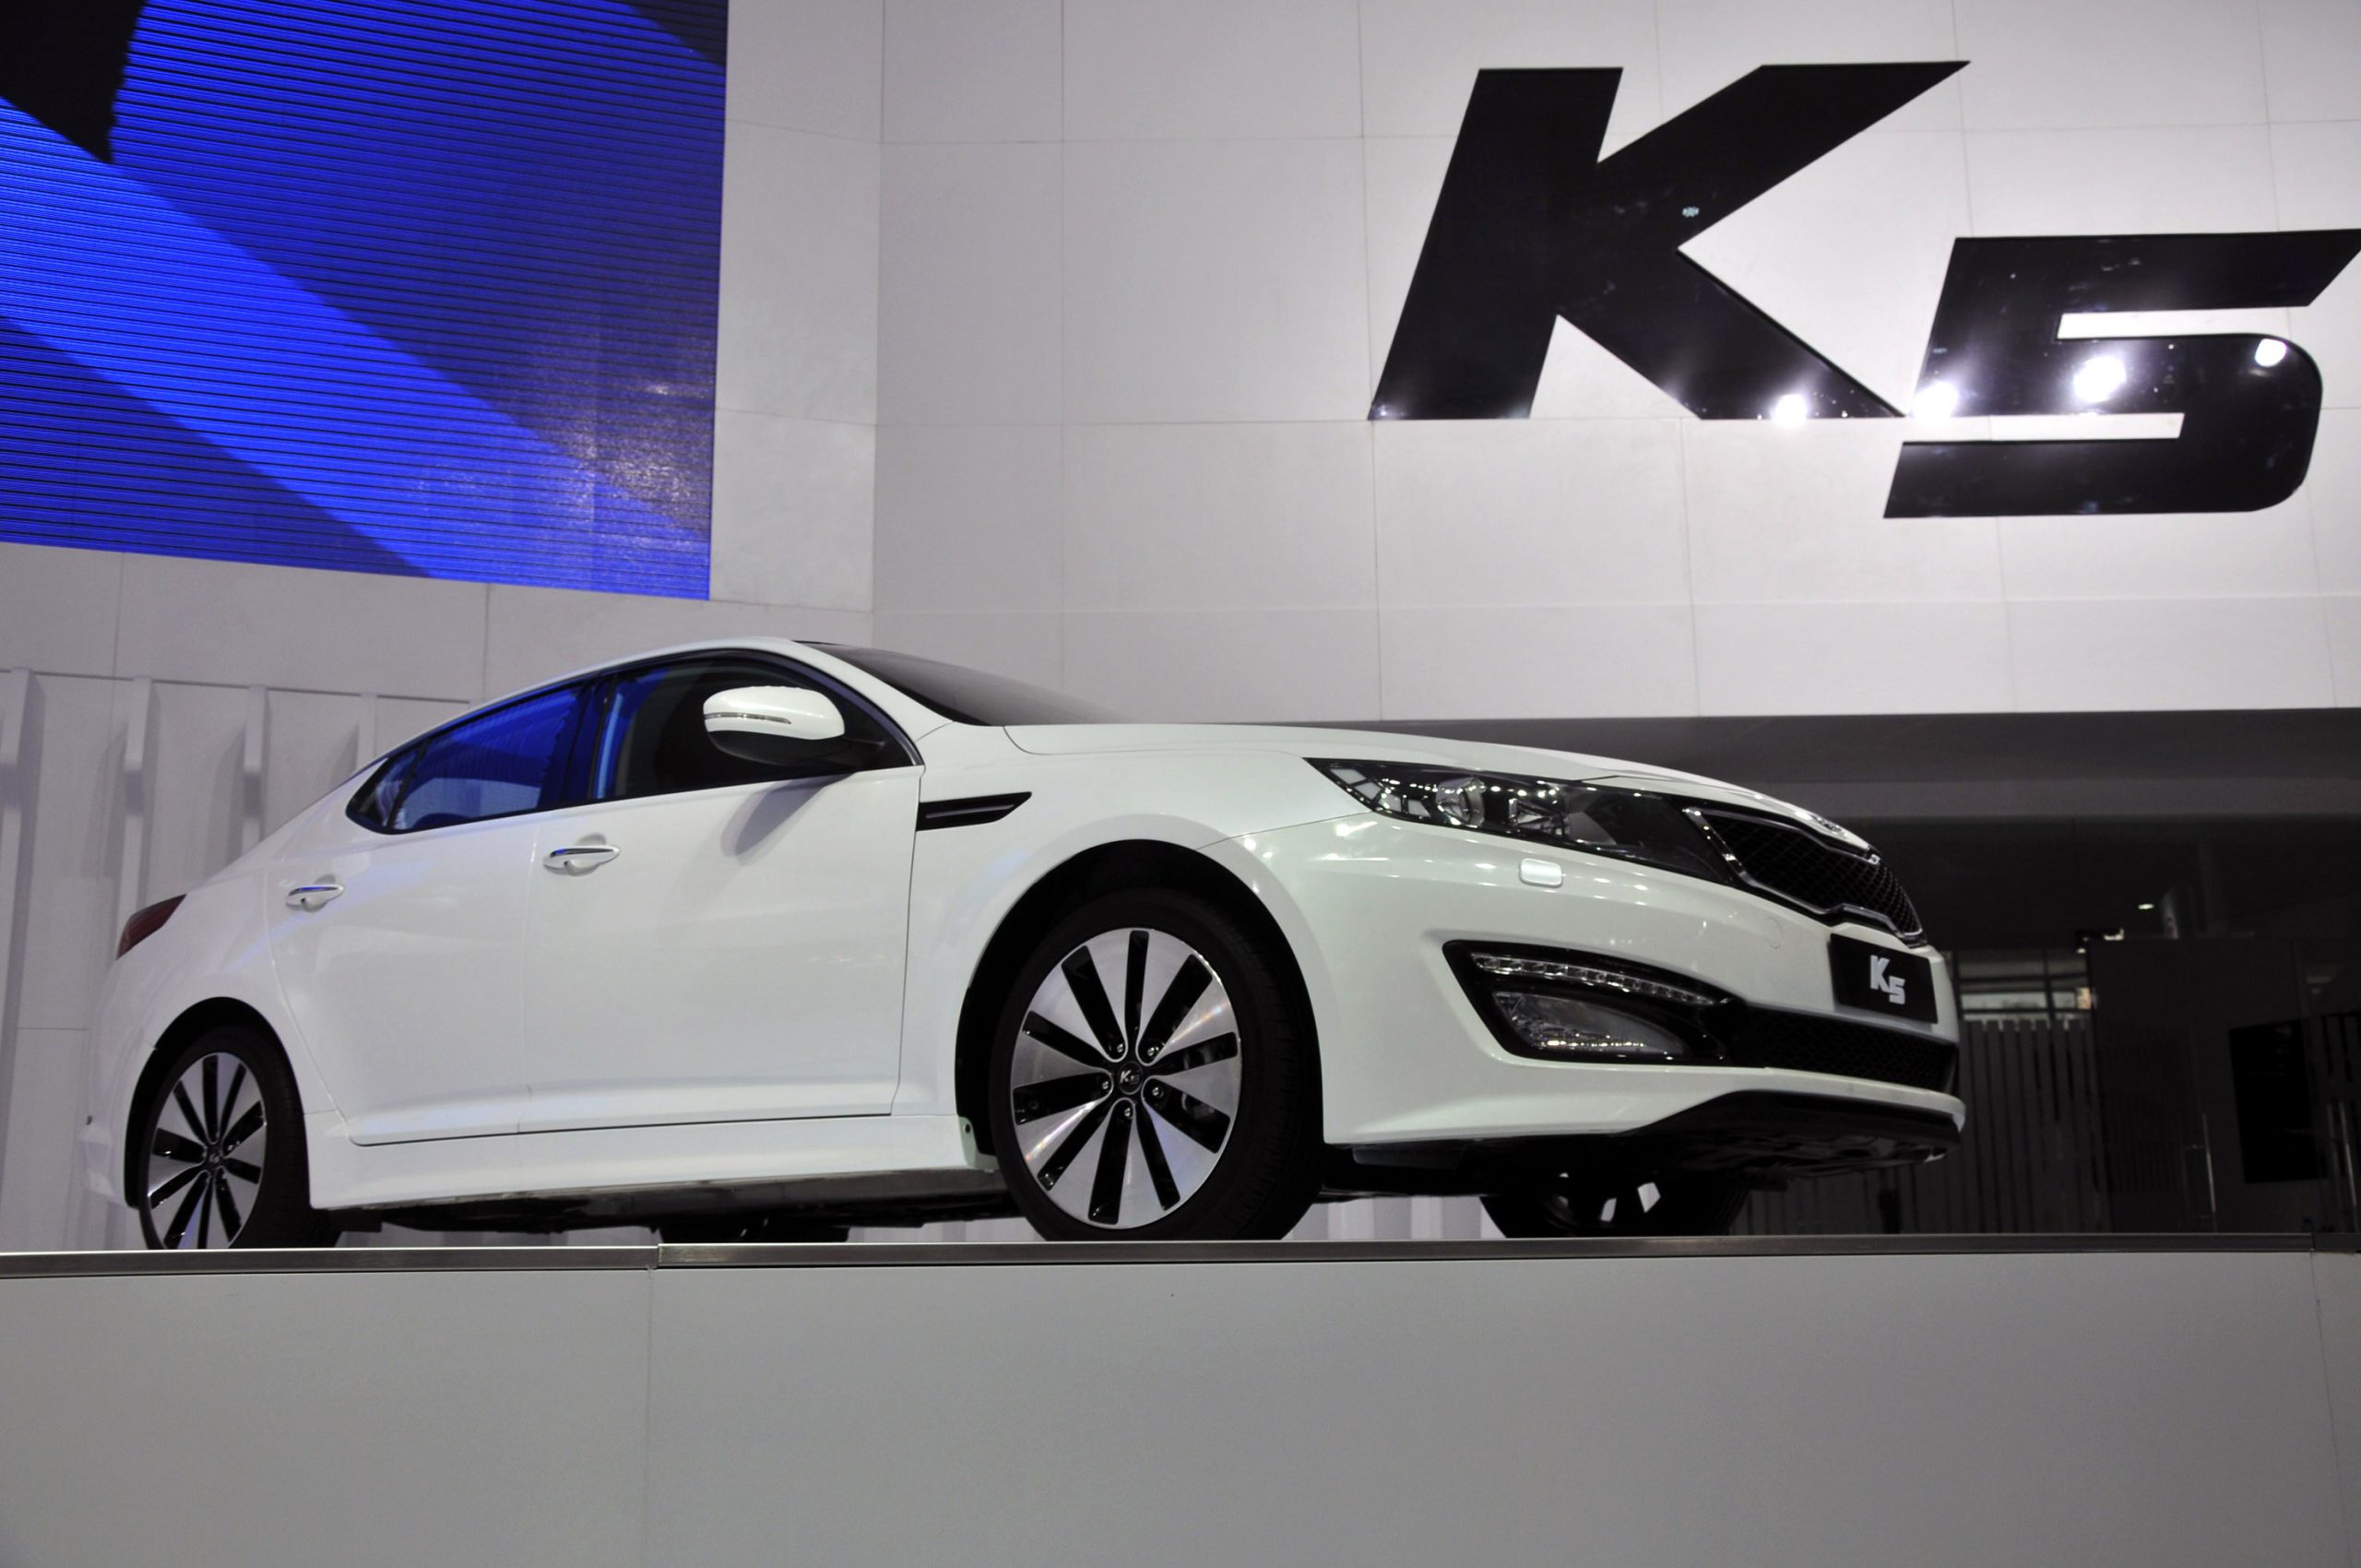 A Kia K5 on display at an auto show